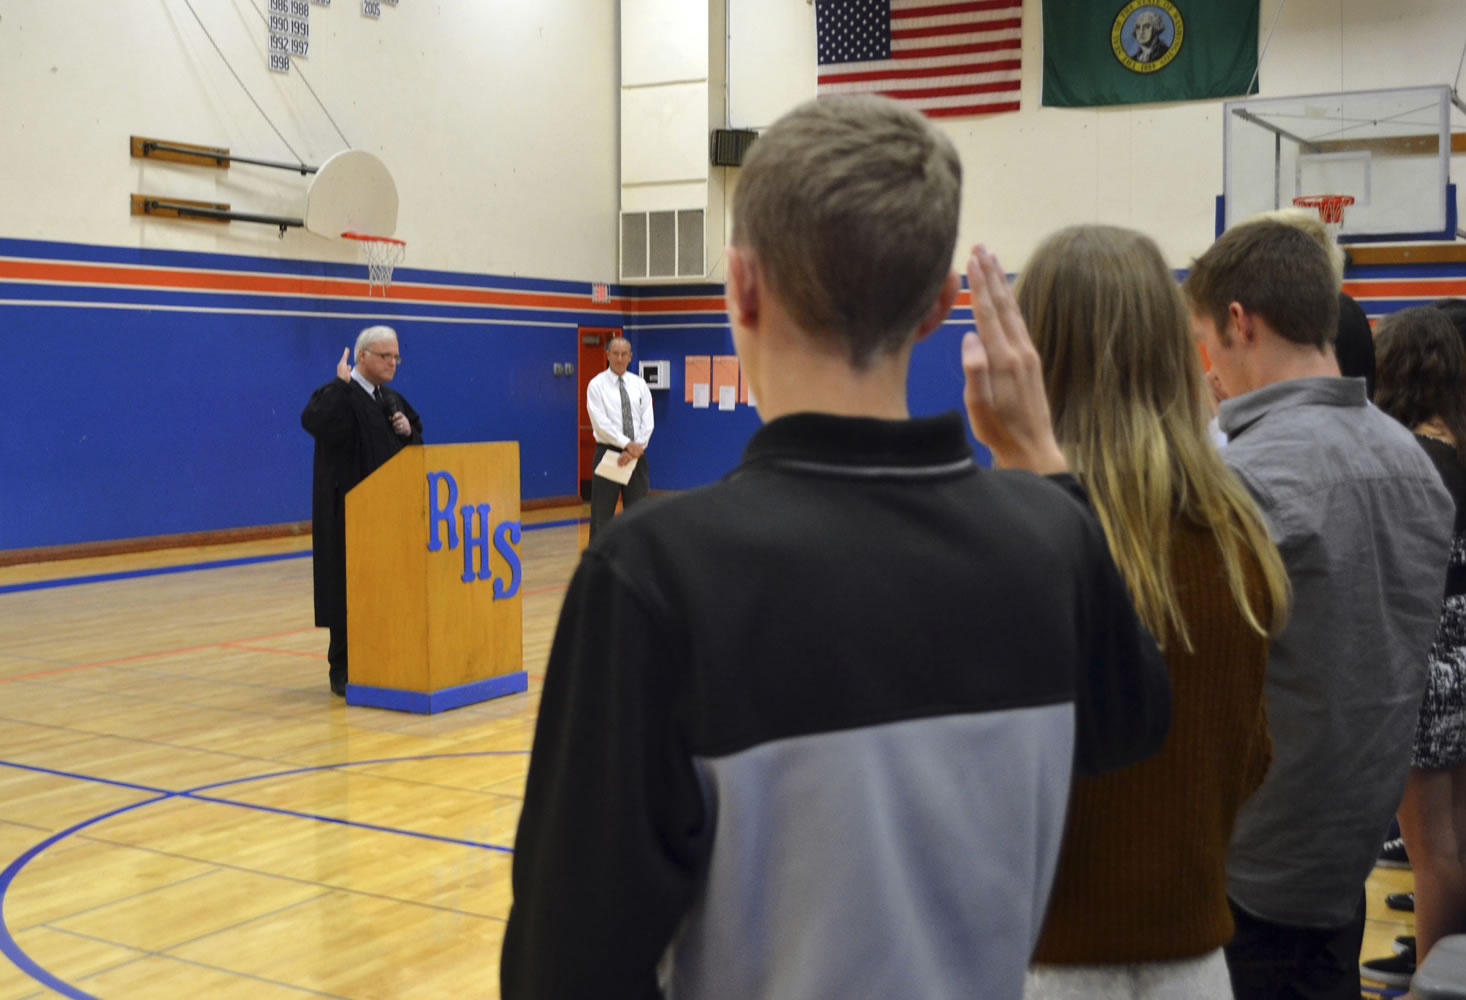 History students simulate a U.S. naturalization ceremony at Ridgefield High School.